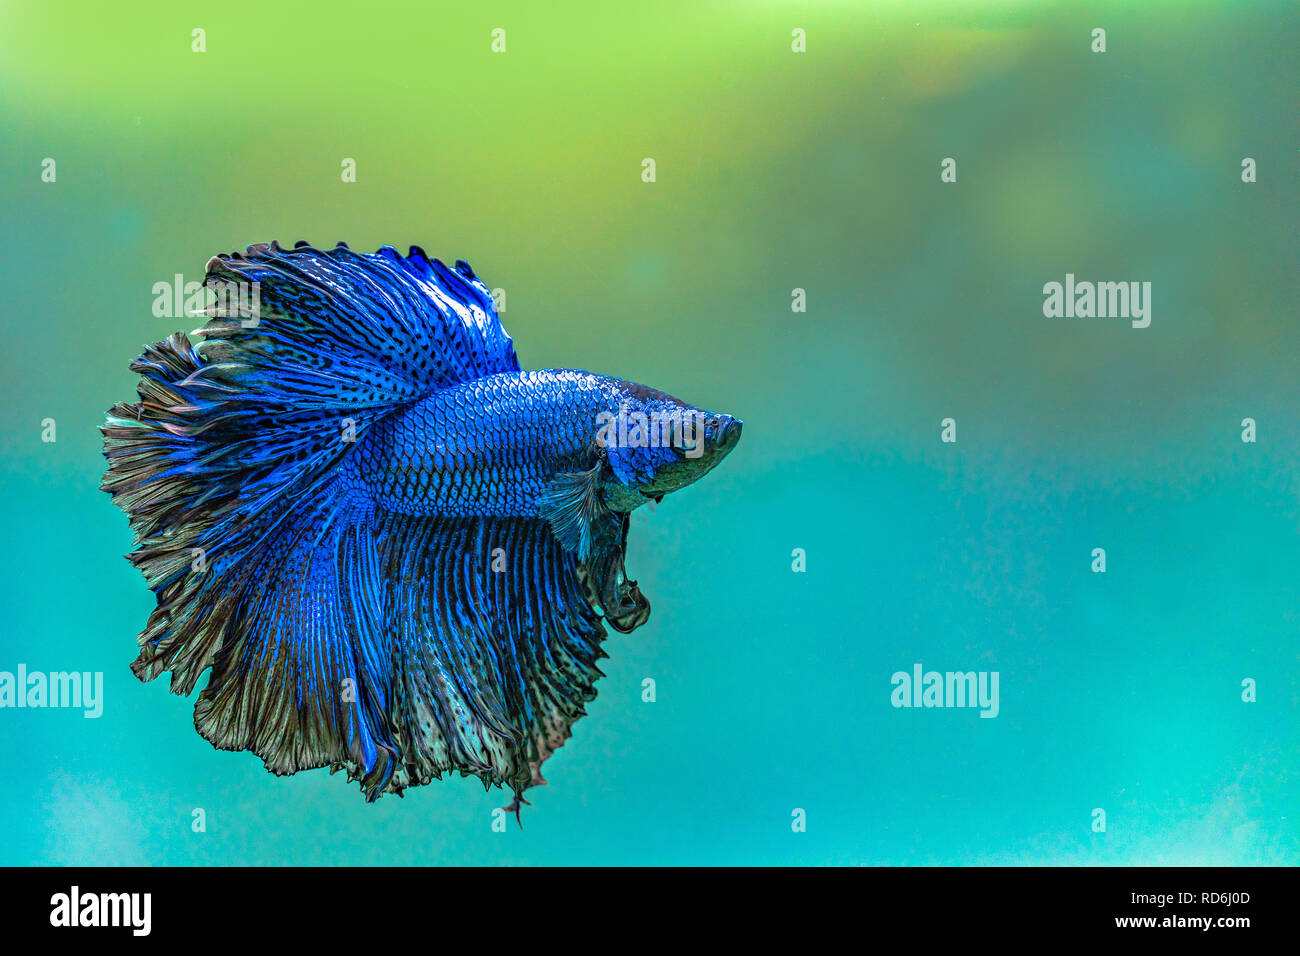 Blue siamese fighting fish,Halfmoon betta fish in aquarium. Stock Photo